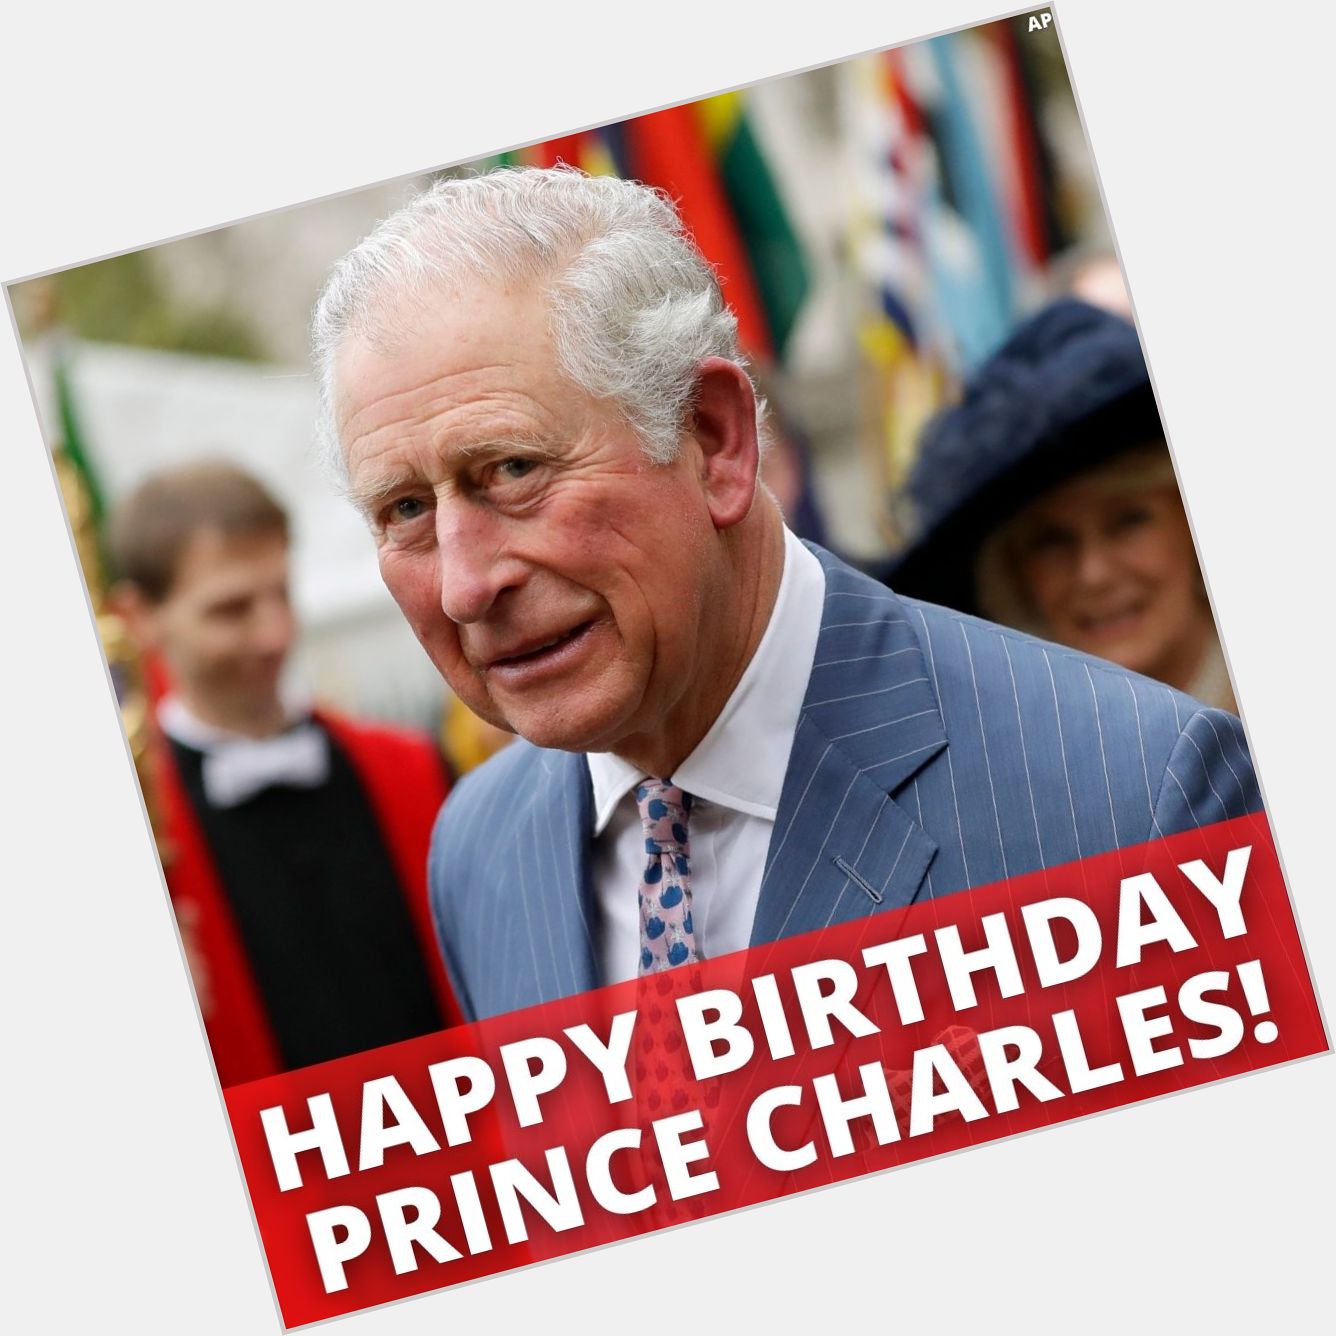 Wishing Prince Charles a happy birthday! 